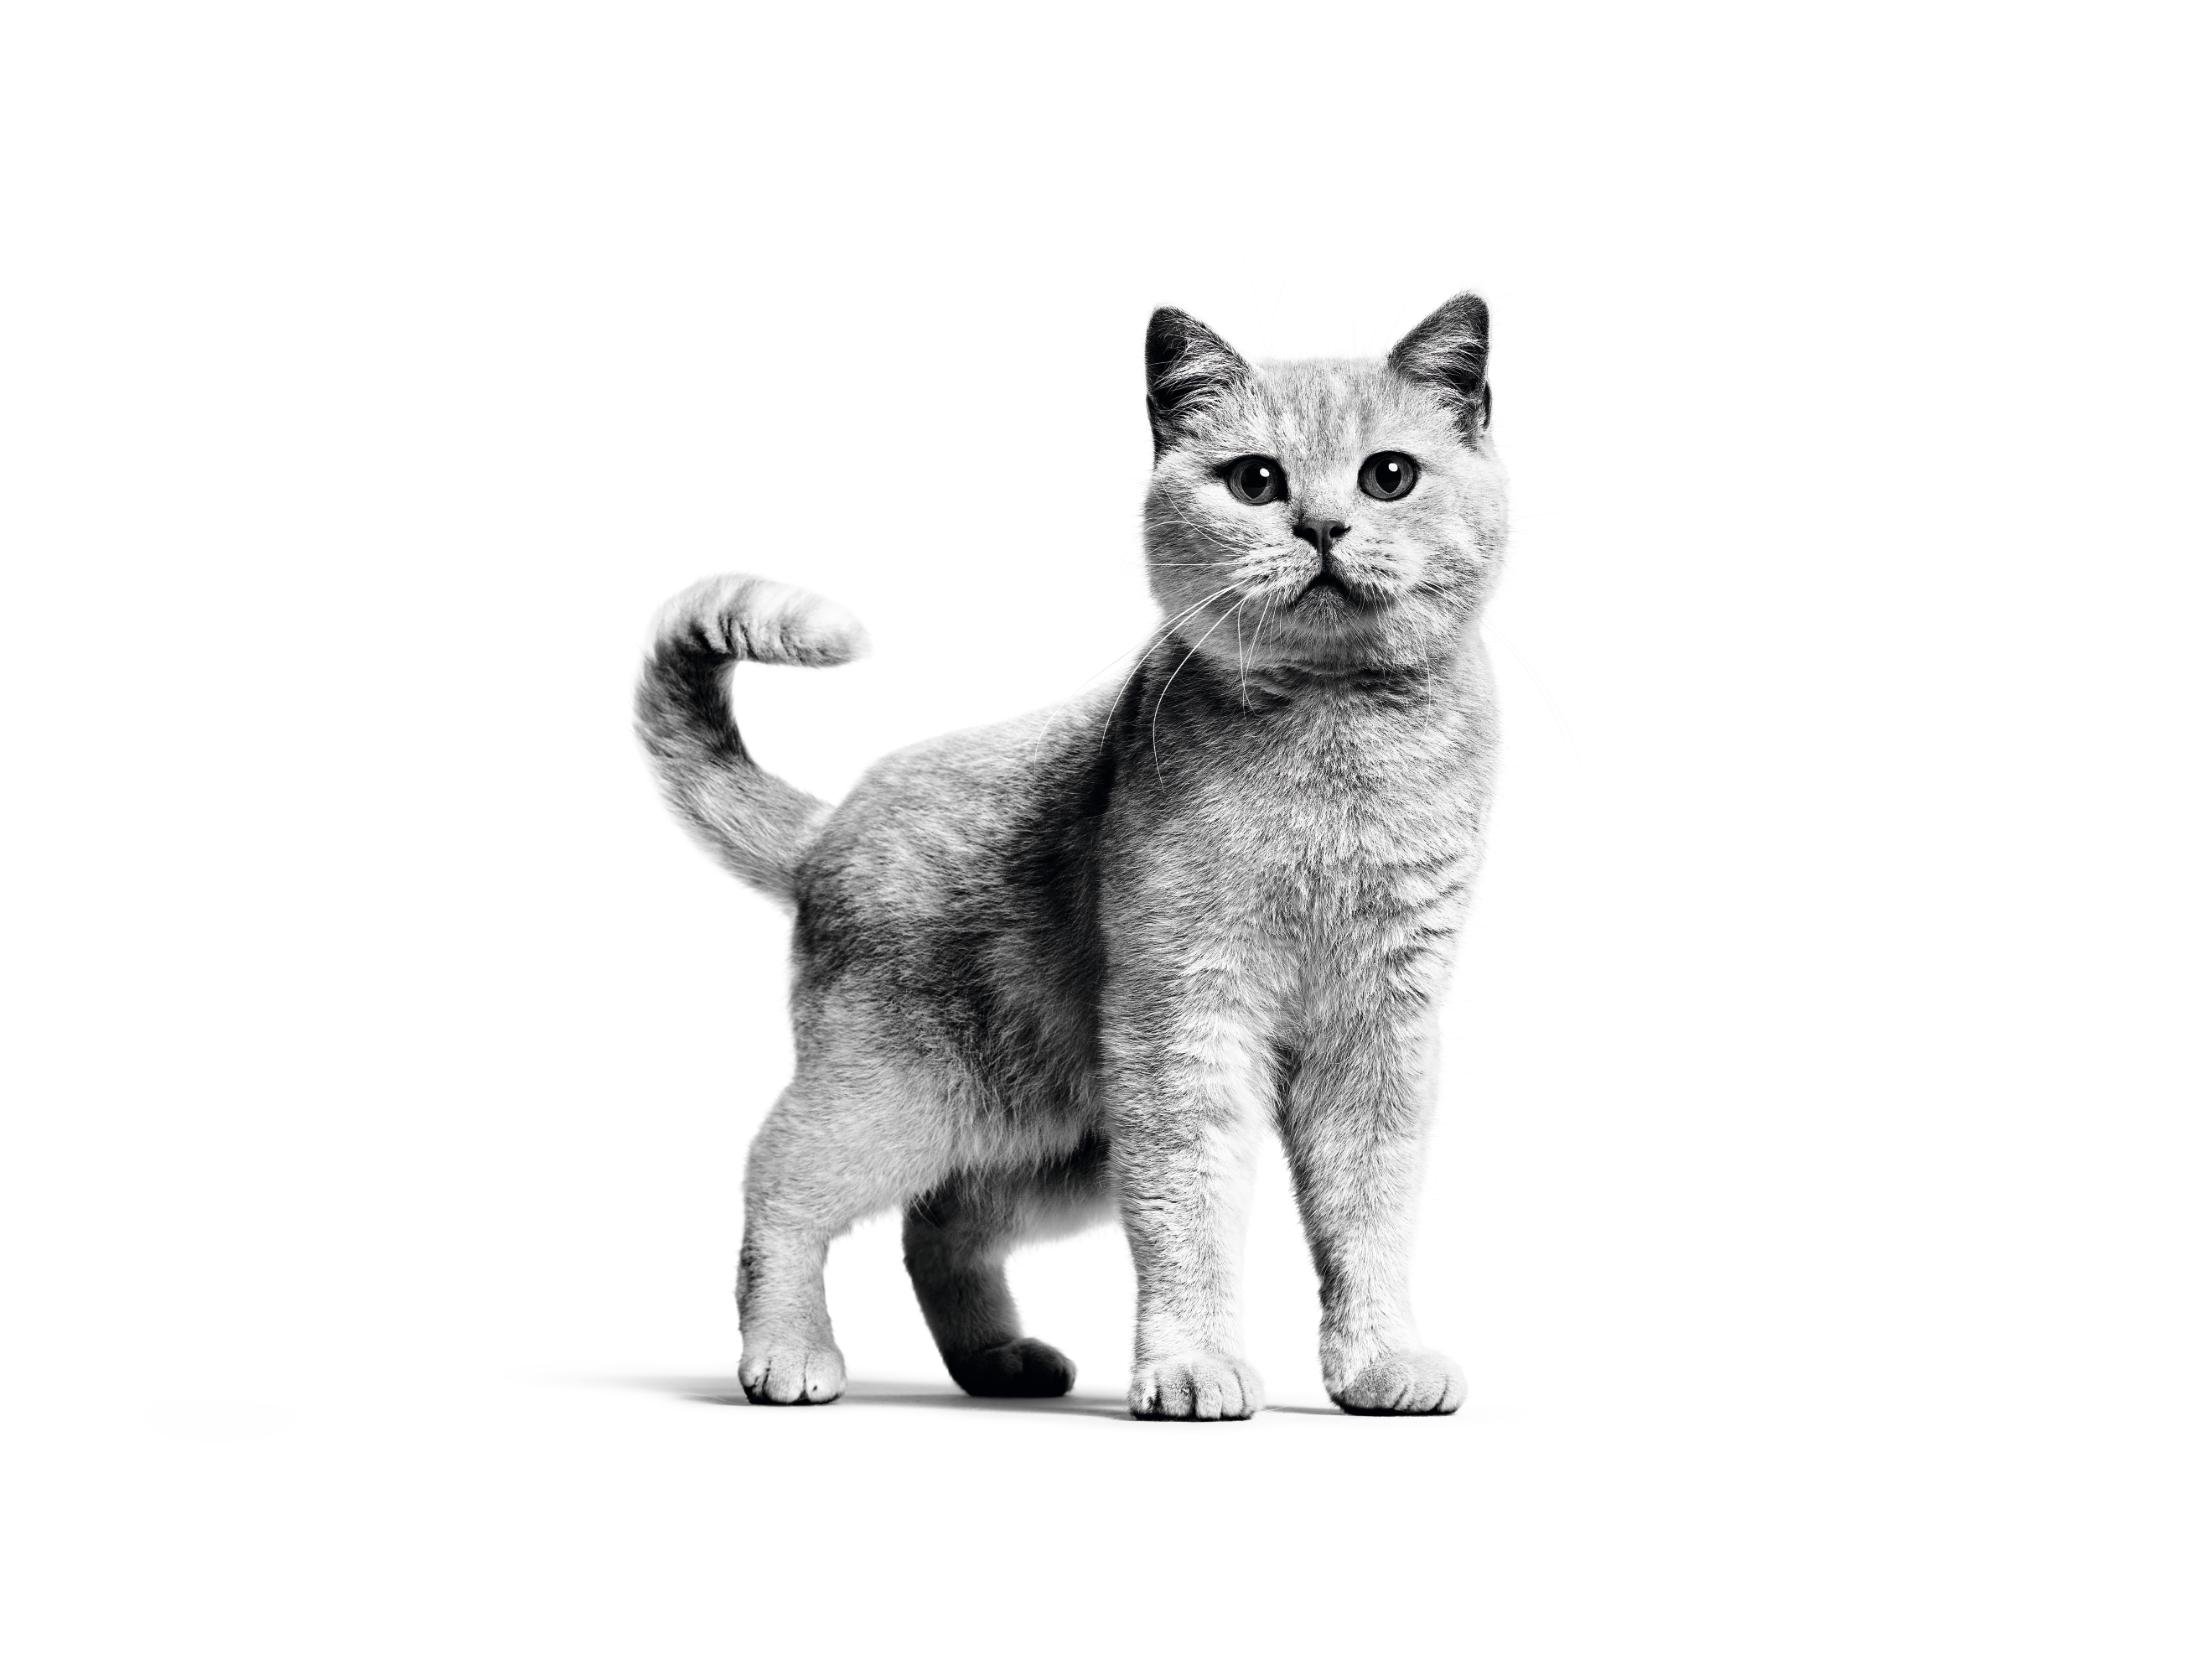 Kucing ras British Shorthair dewasa berdiri dalam warna hitam putih